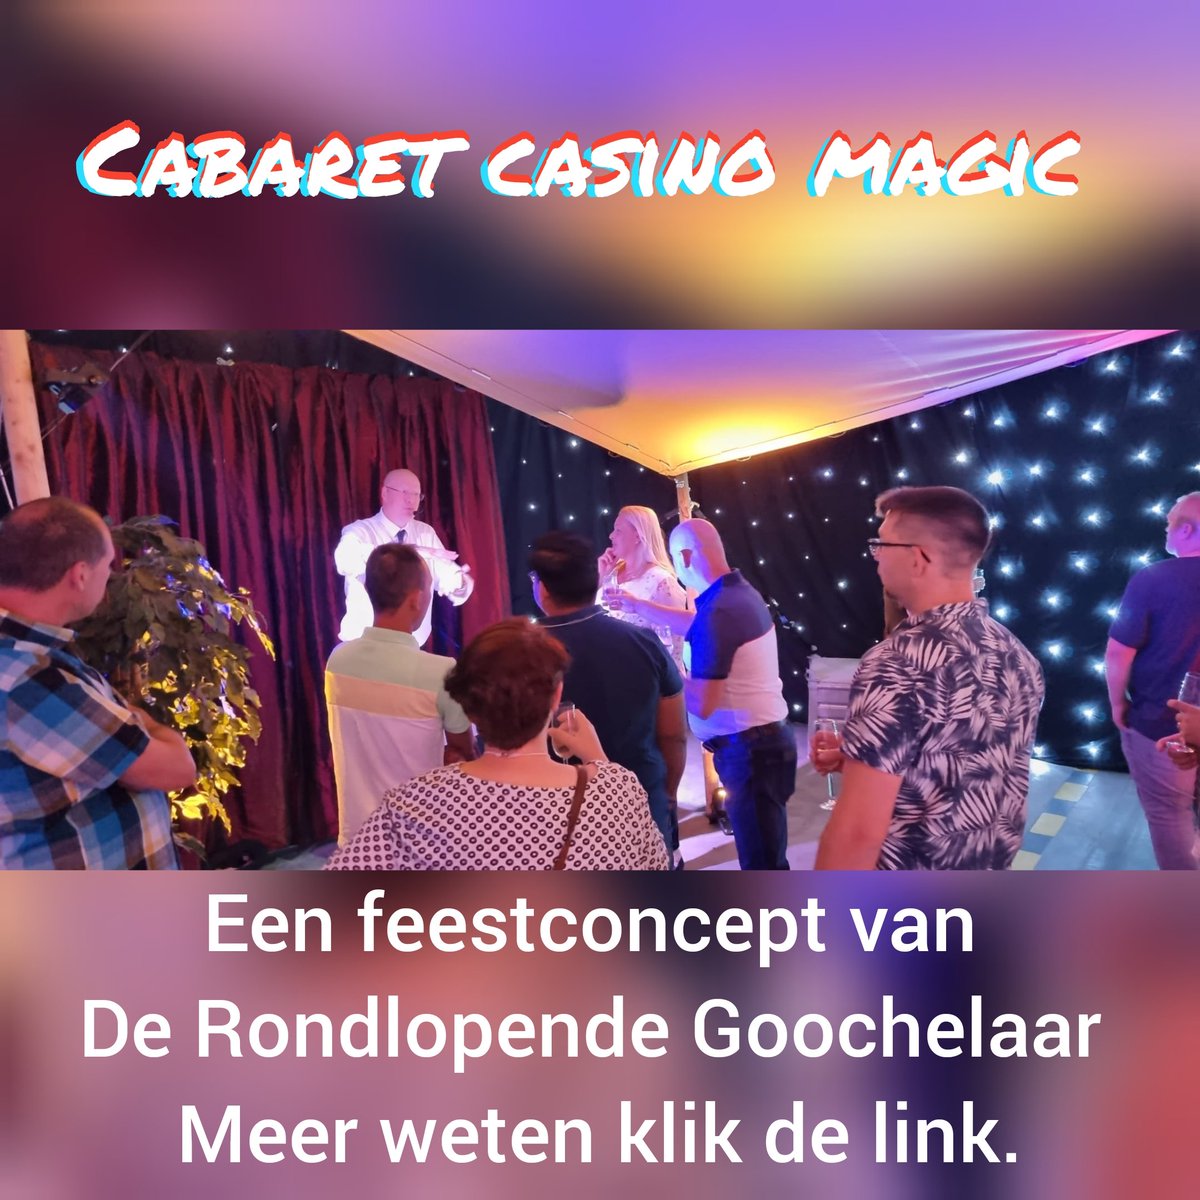 derondlopendegoochelaar.nl/cabaret-casino…

#casinoentertainment #cabaretcasinomagic #casinogames #eventplanner #evenementenbranche #evenenmenten #festival2023 #festival #eventplanning #evenementenbureau #evenenmentenorganisatie